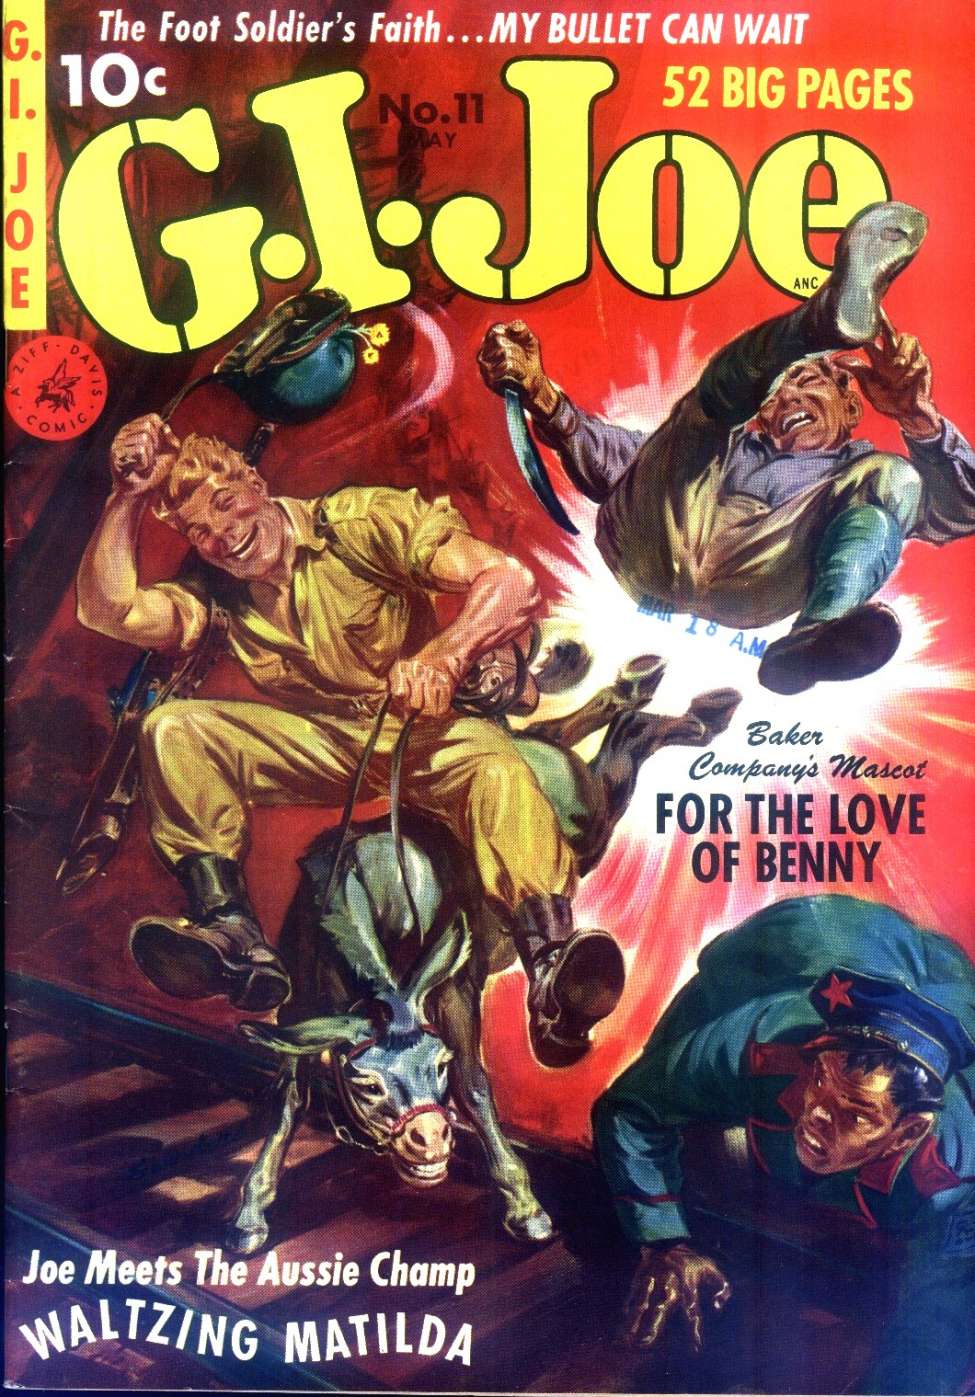 Comic Book Cover For G.I. Joe 11